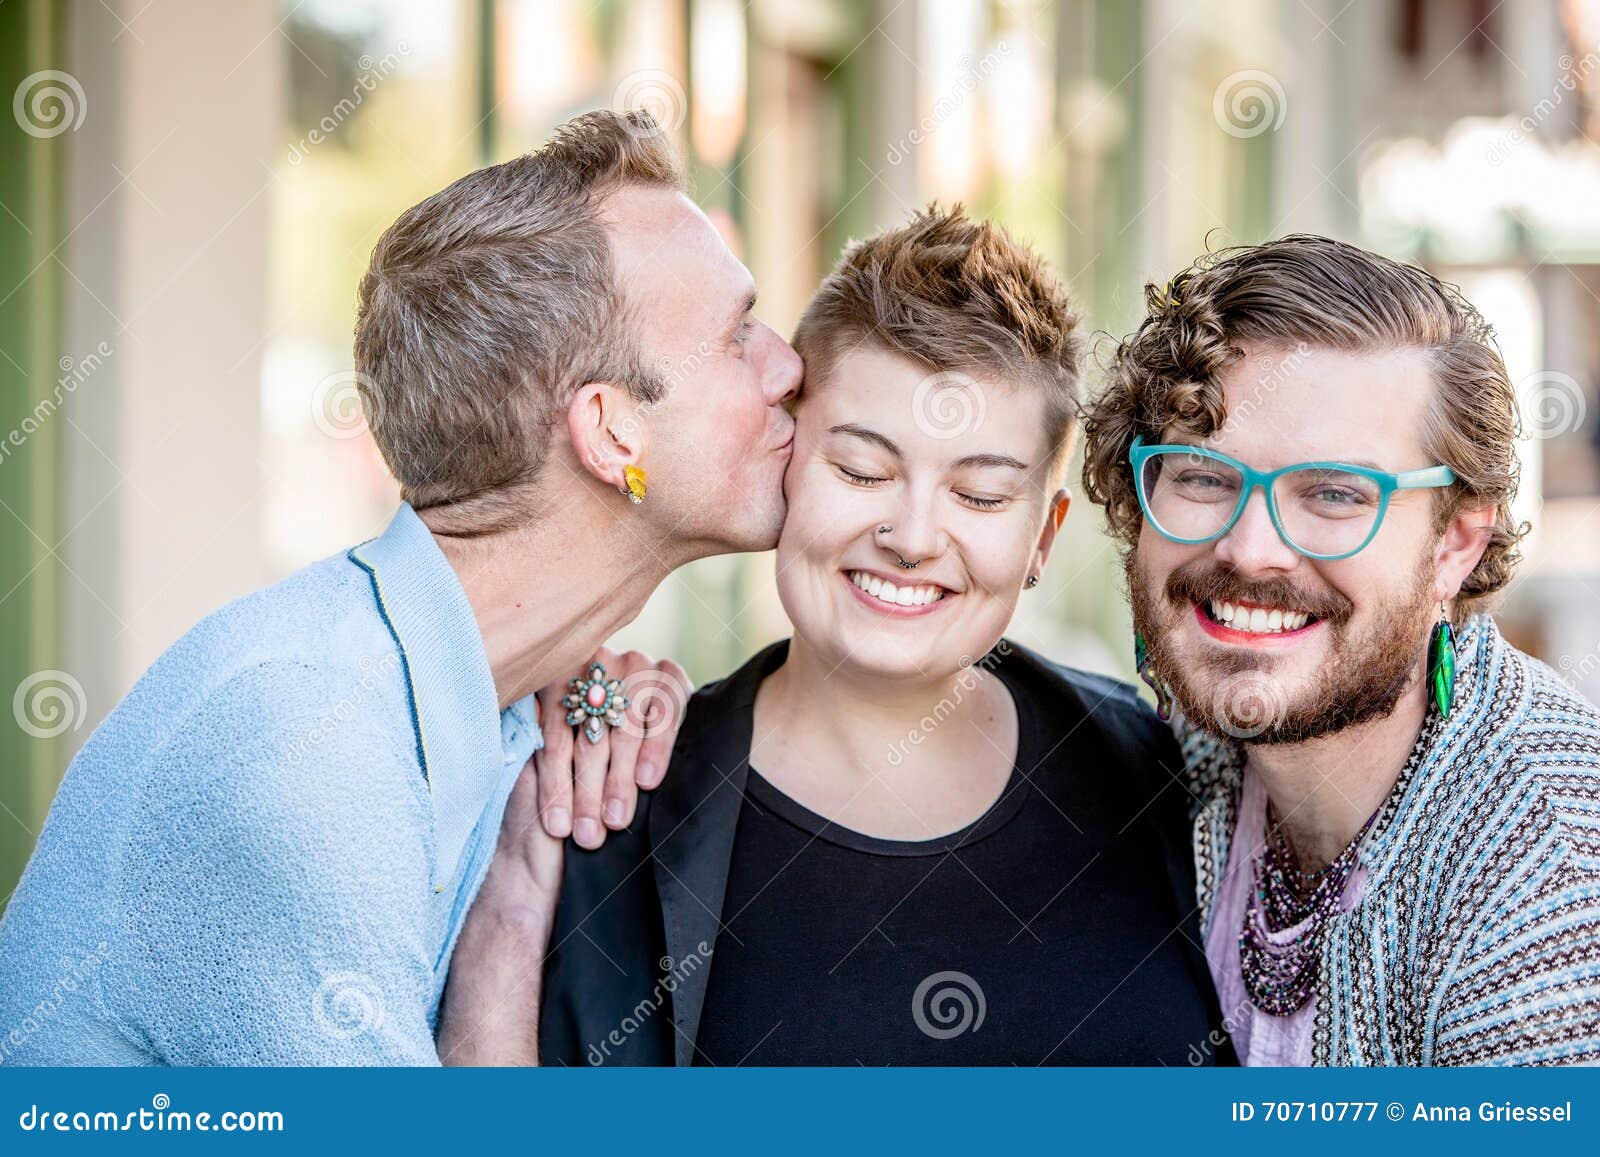 Friendly Kiss among Friends Stock Image - Image of glbtq, masculine ...